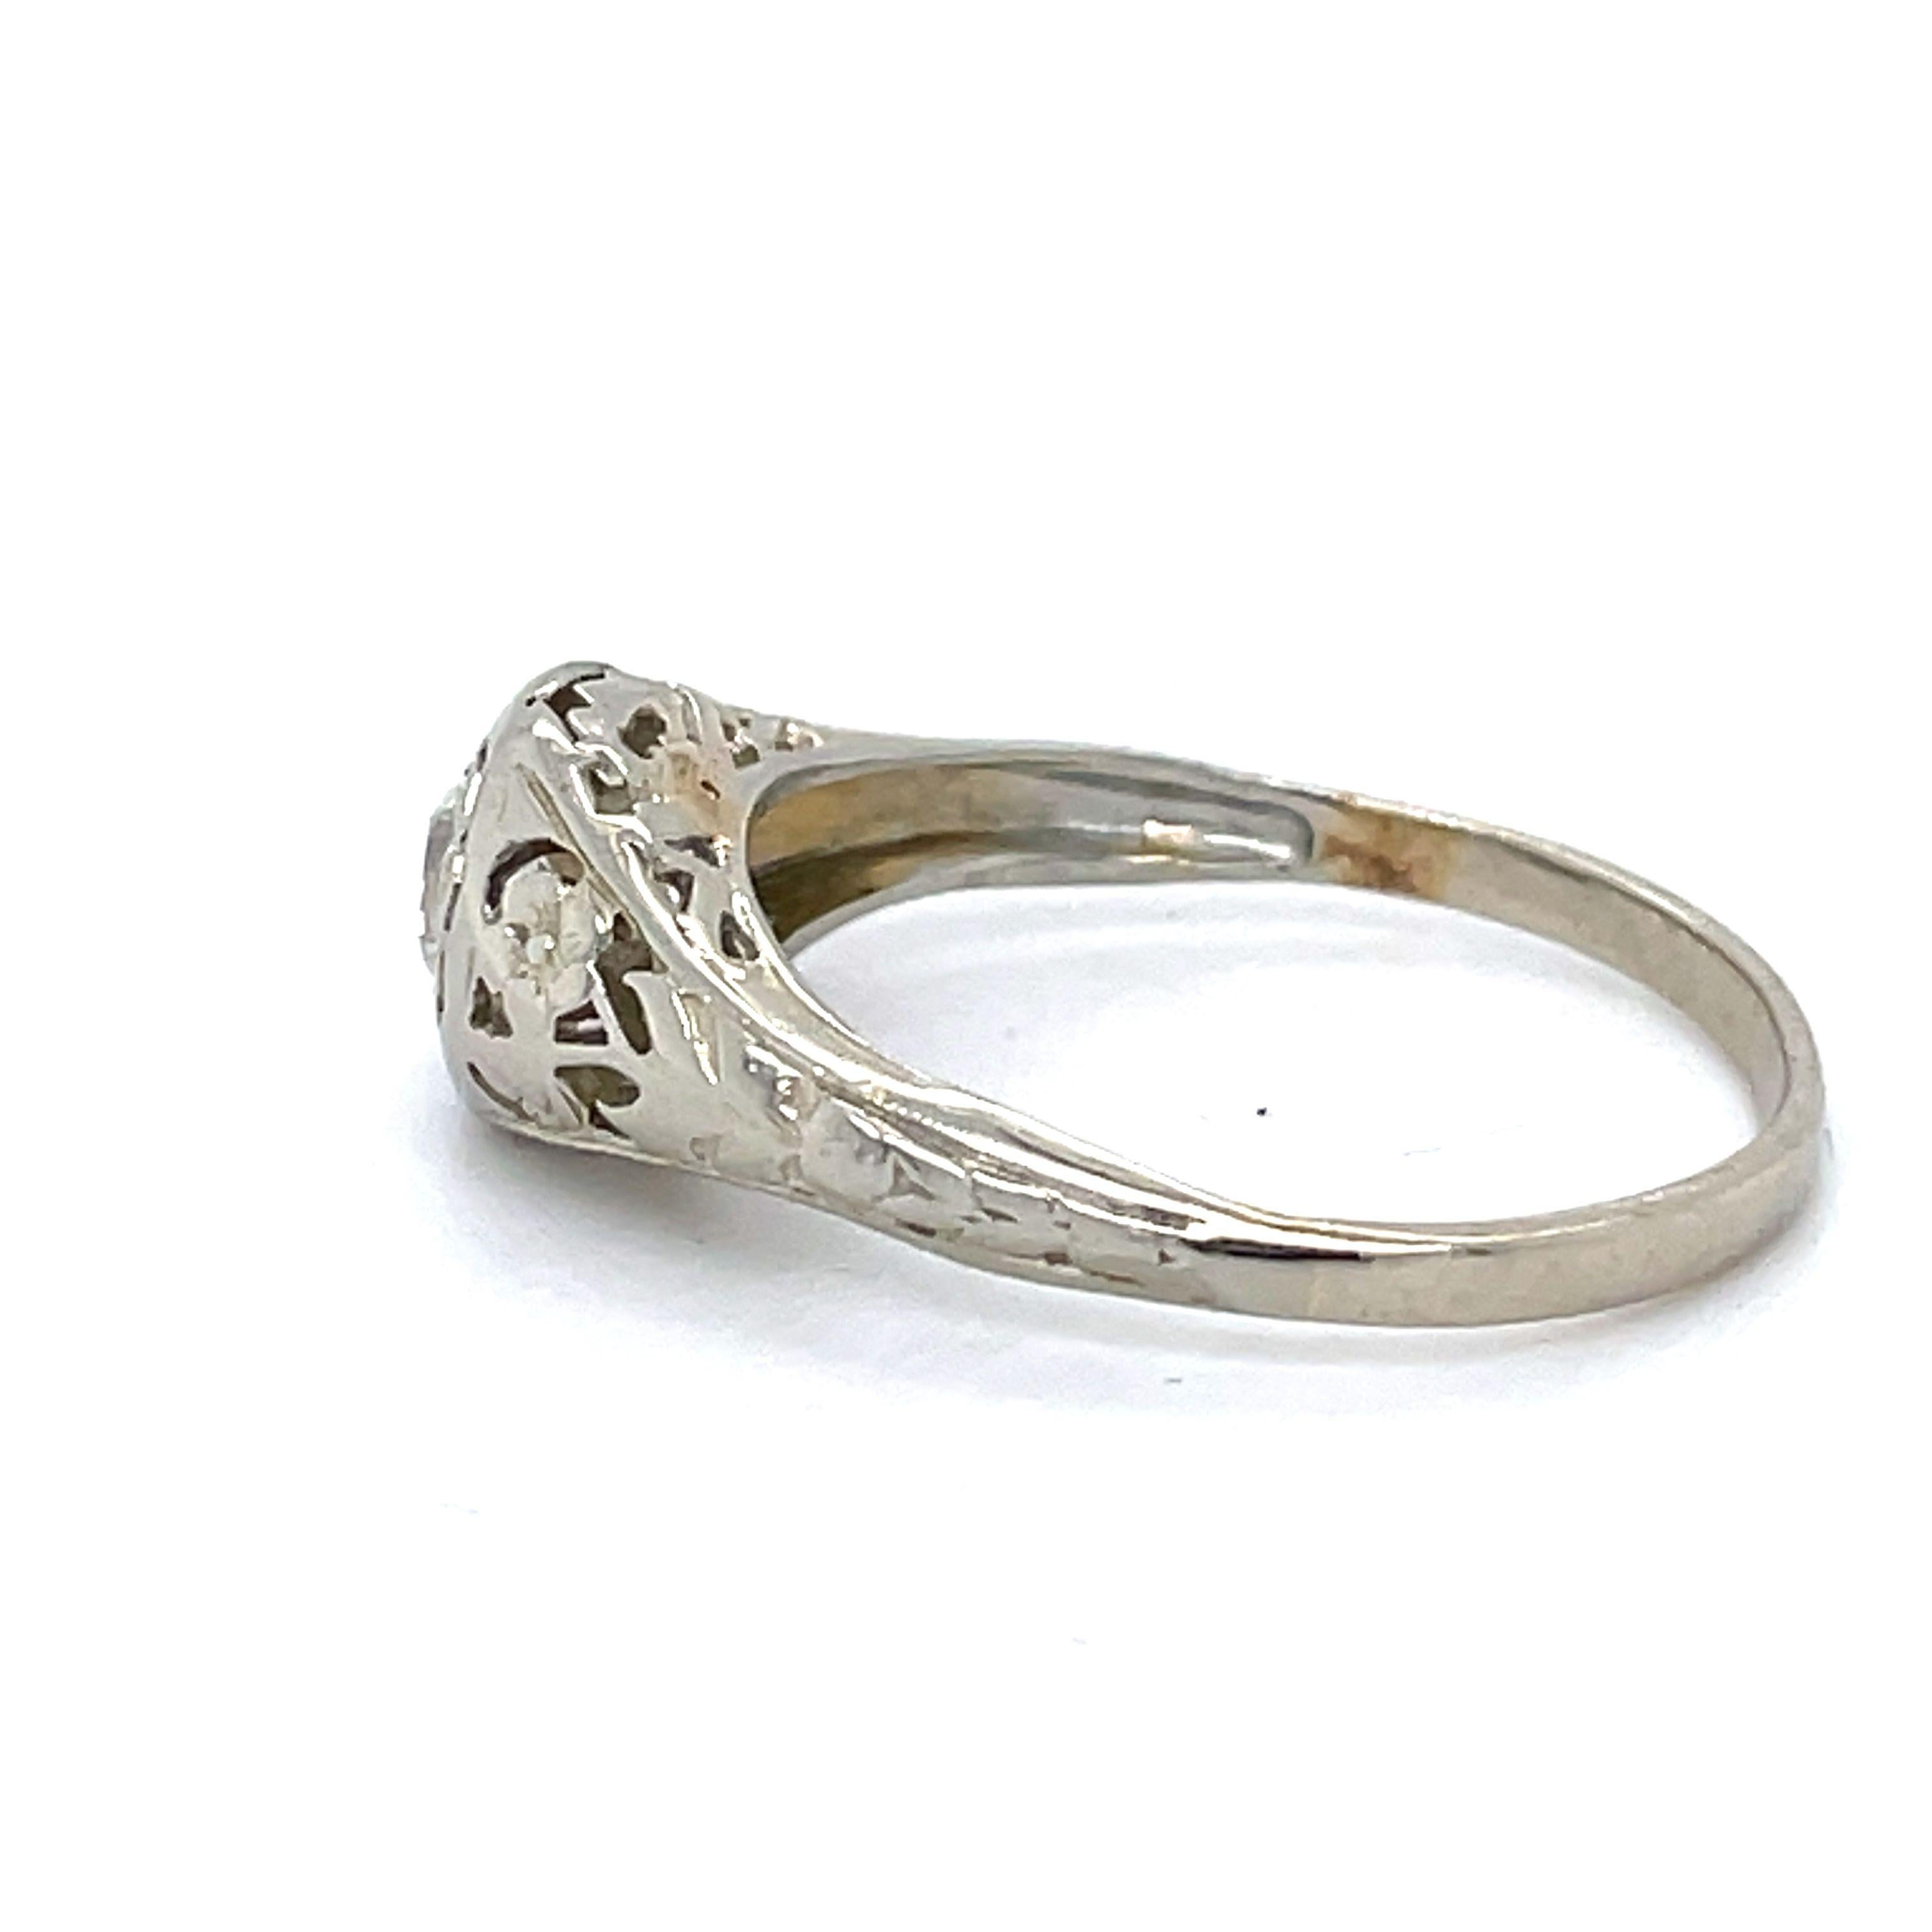 Art Deco Dome Filigree Ring - 18K White gold dome ring, 0.15ct old European cut diamond For Sale